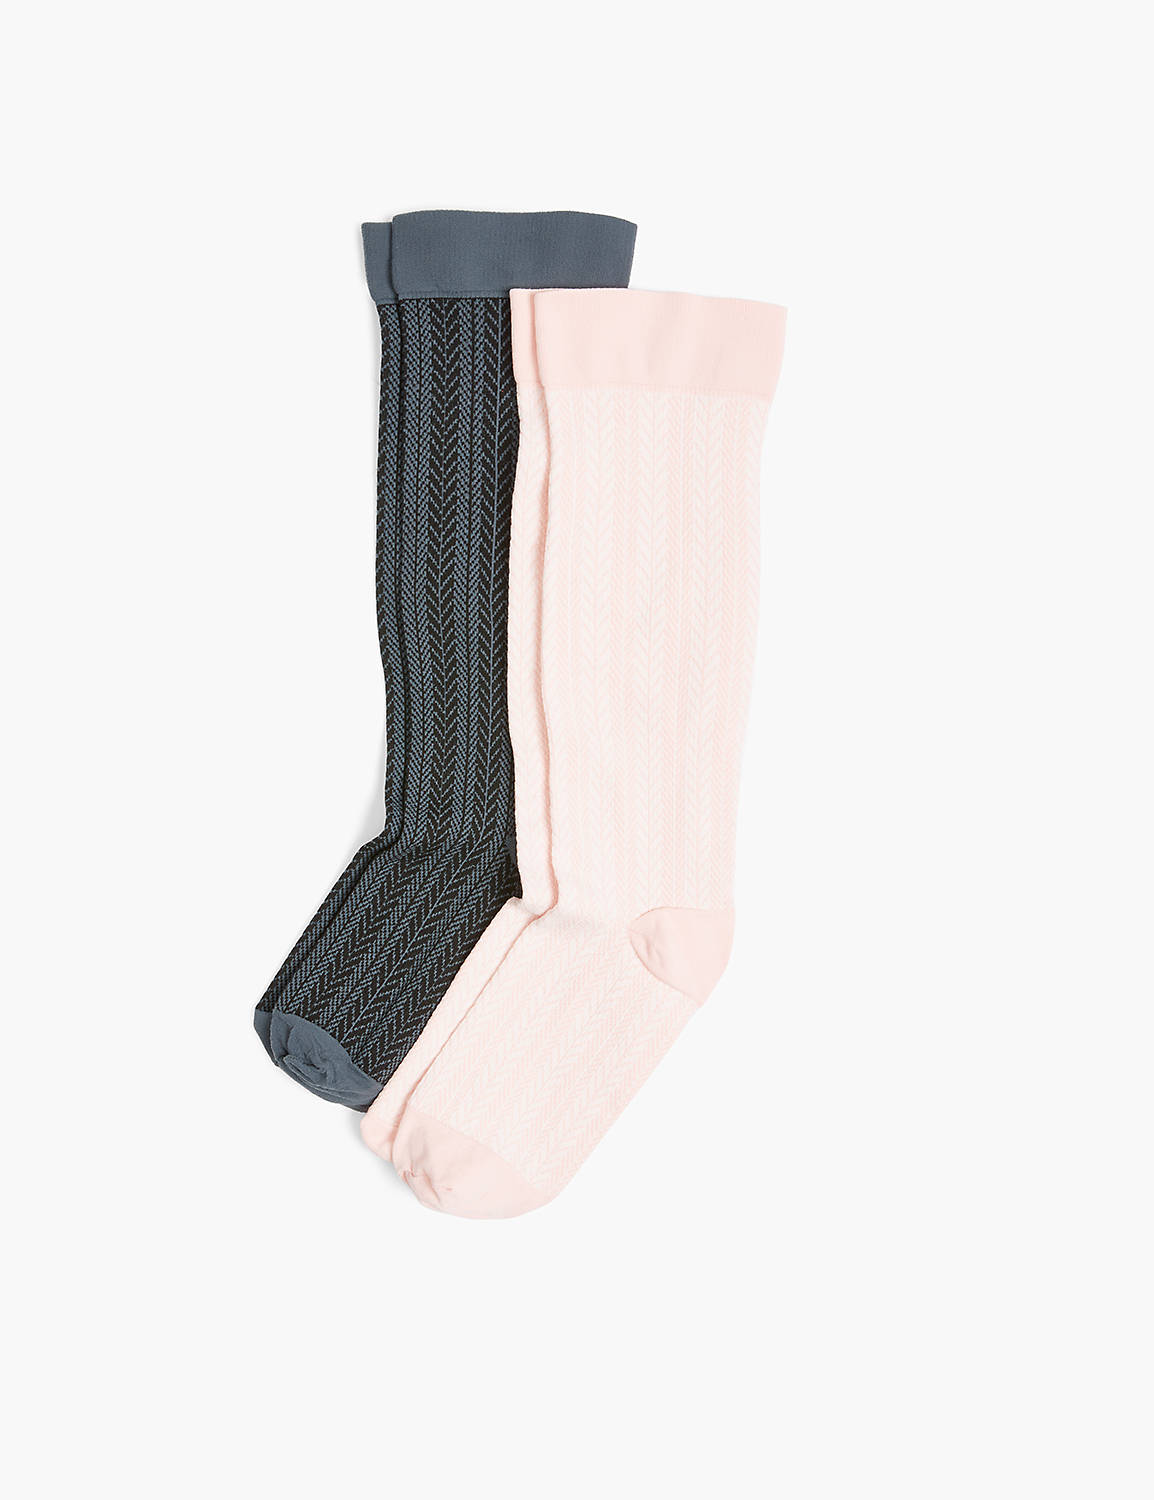 EWC Compression Sock Textured Print Product Image 1